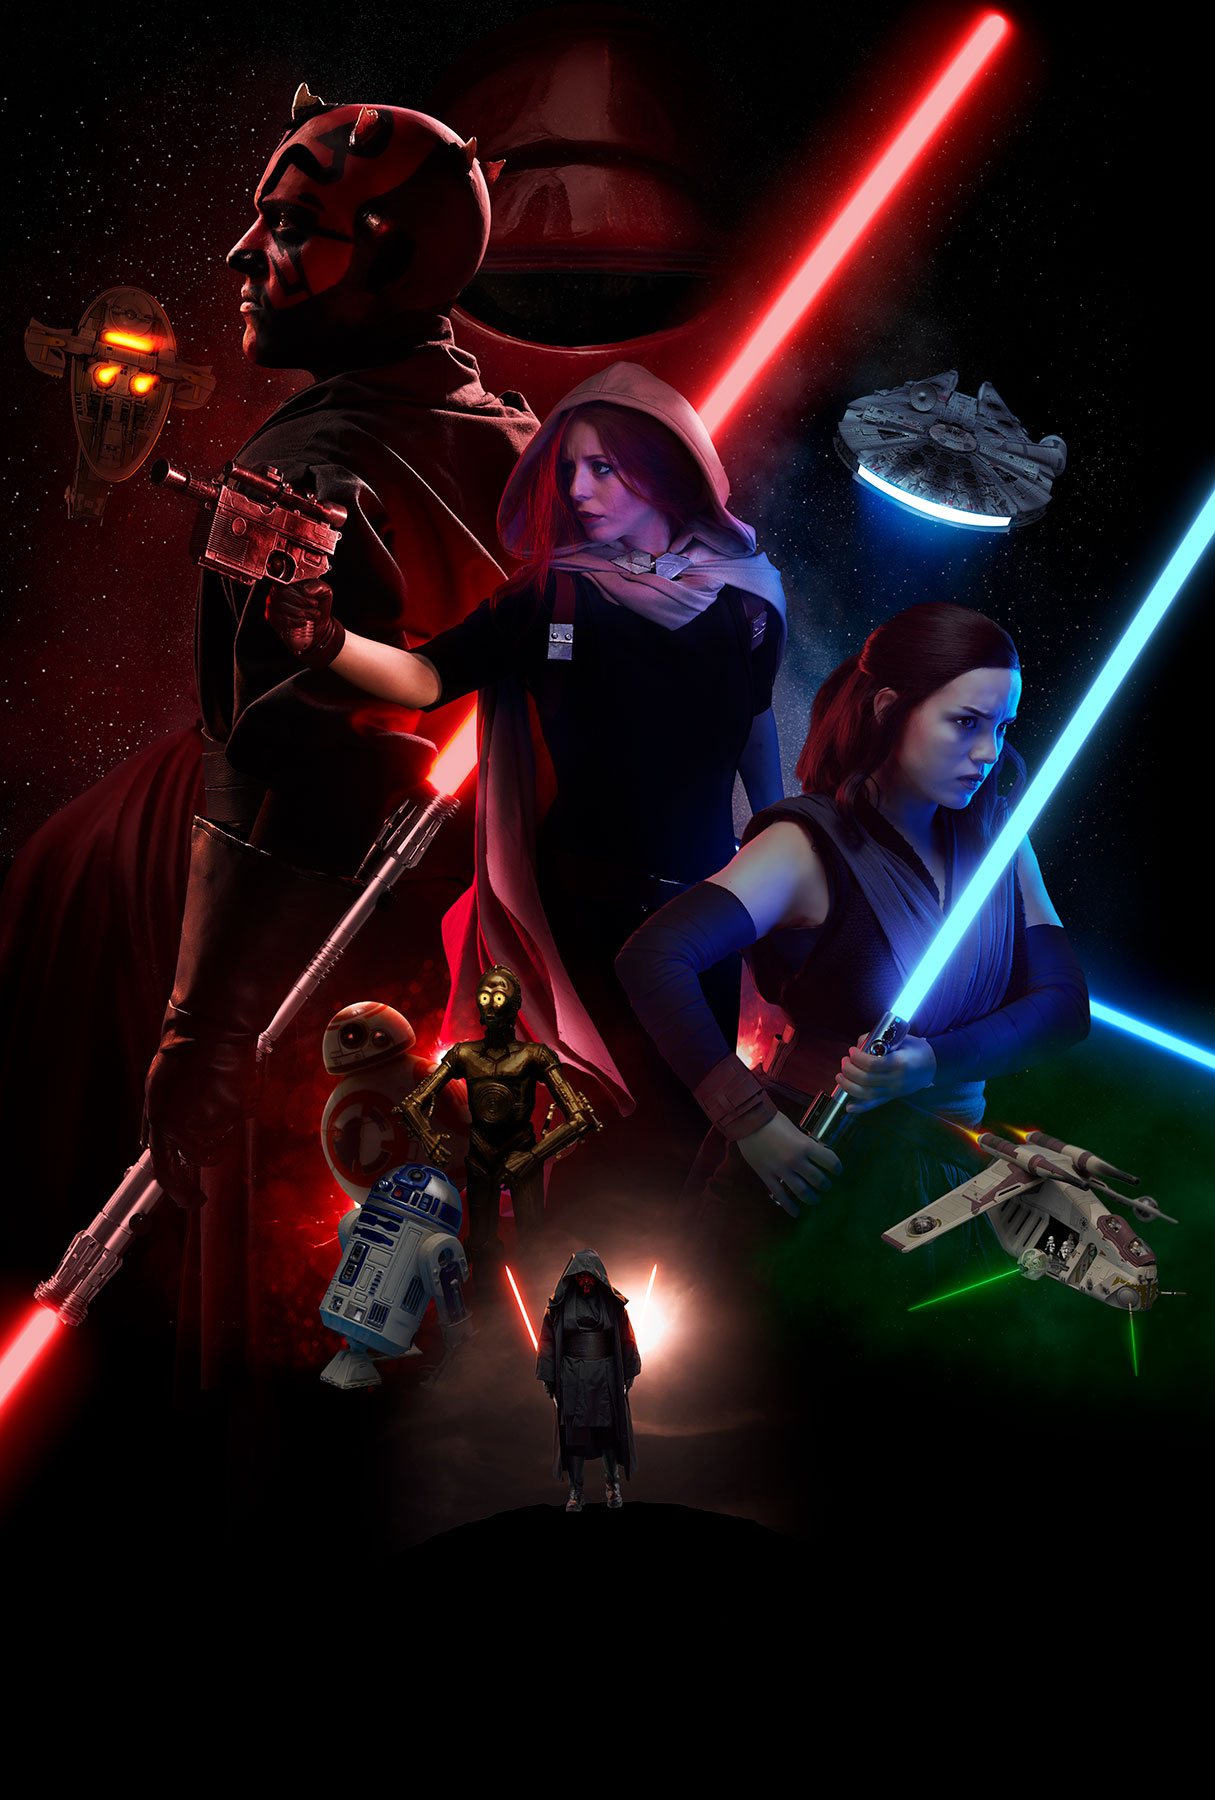 Sayanoff Arthur Star Wars Poster 02 11